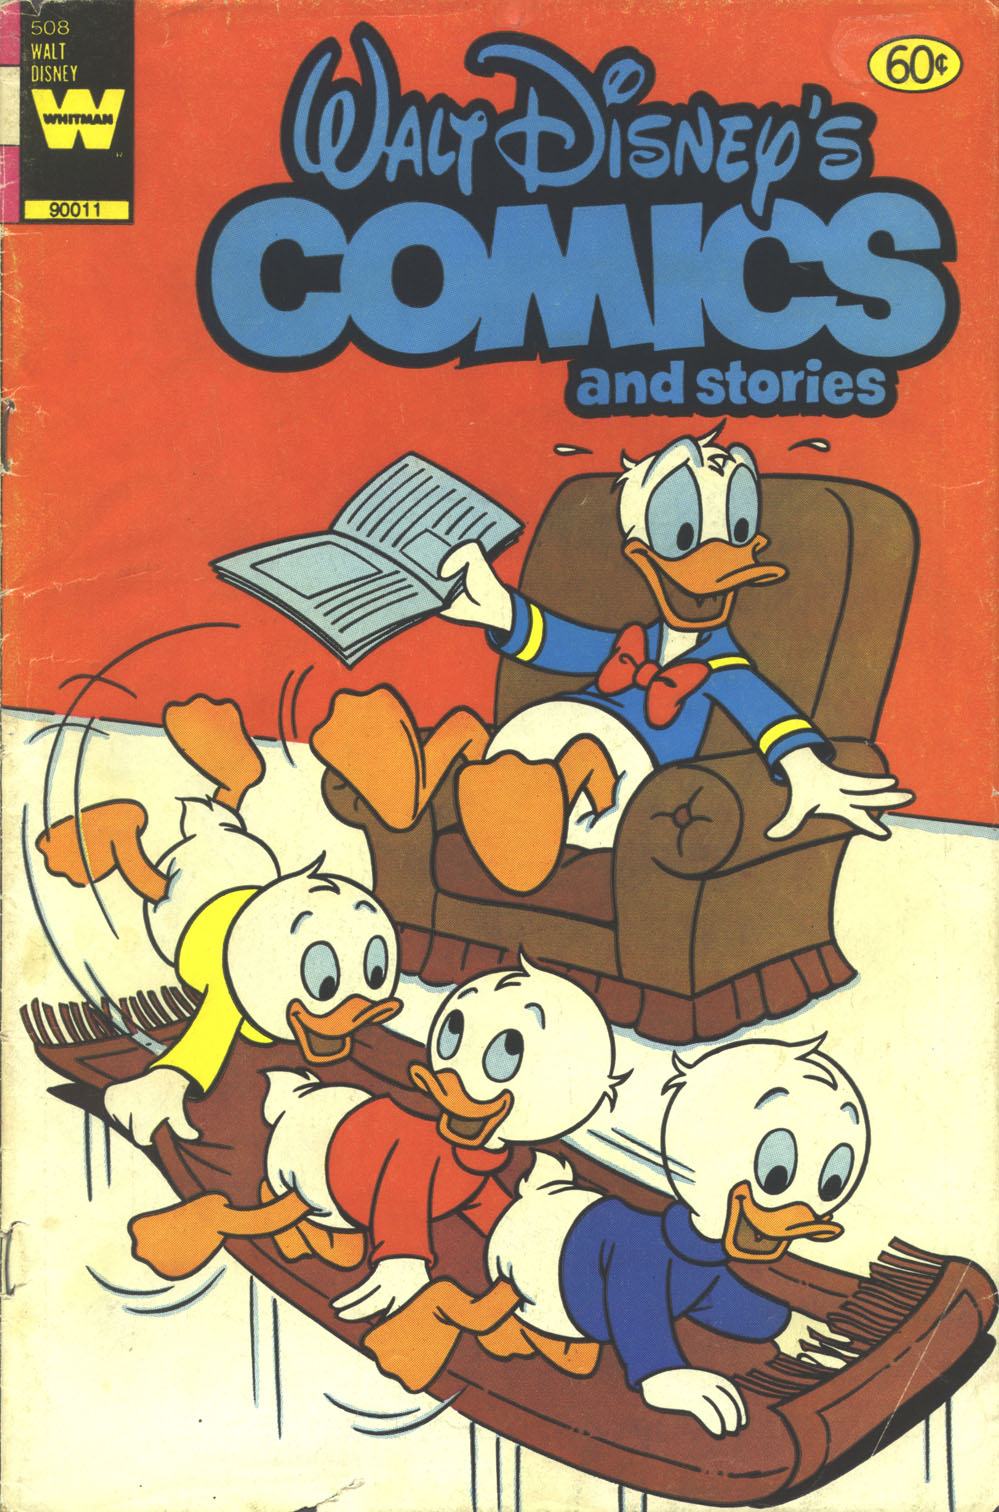 Walt Disneys Comics and Stories 508 Page 1